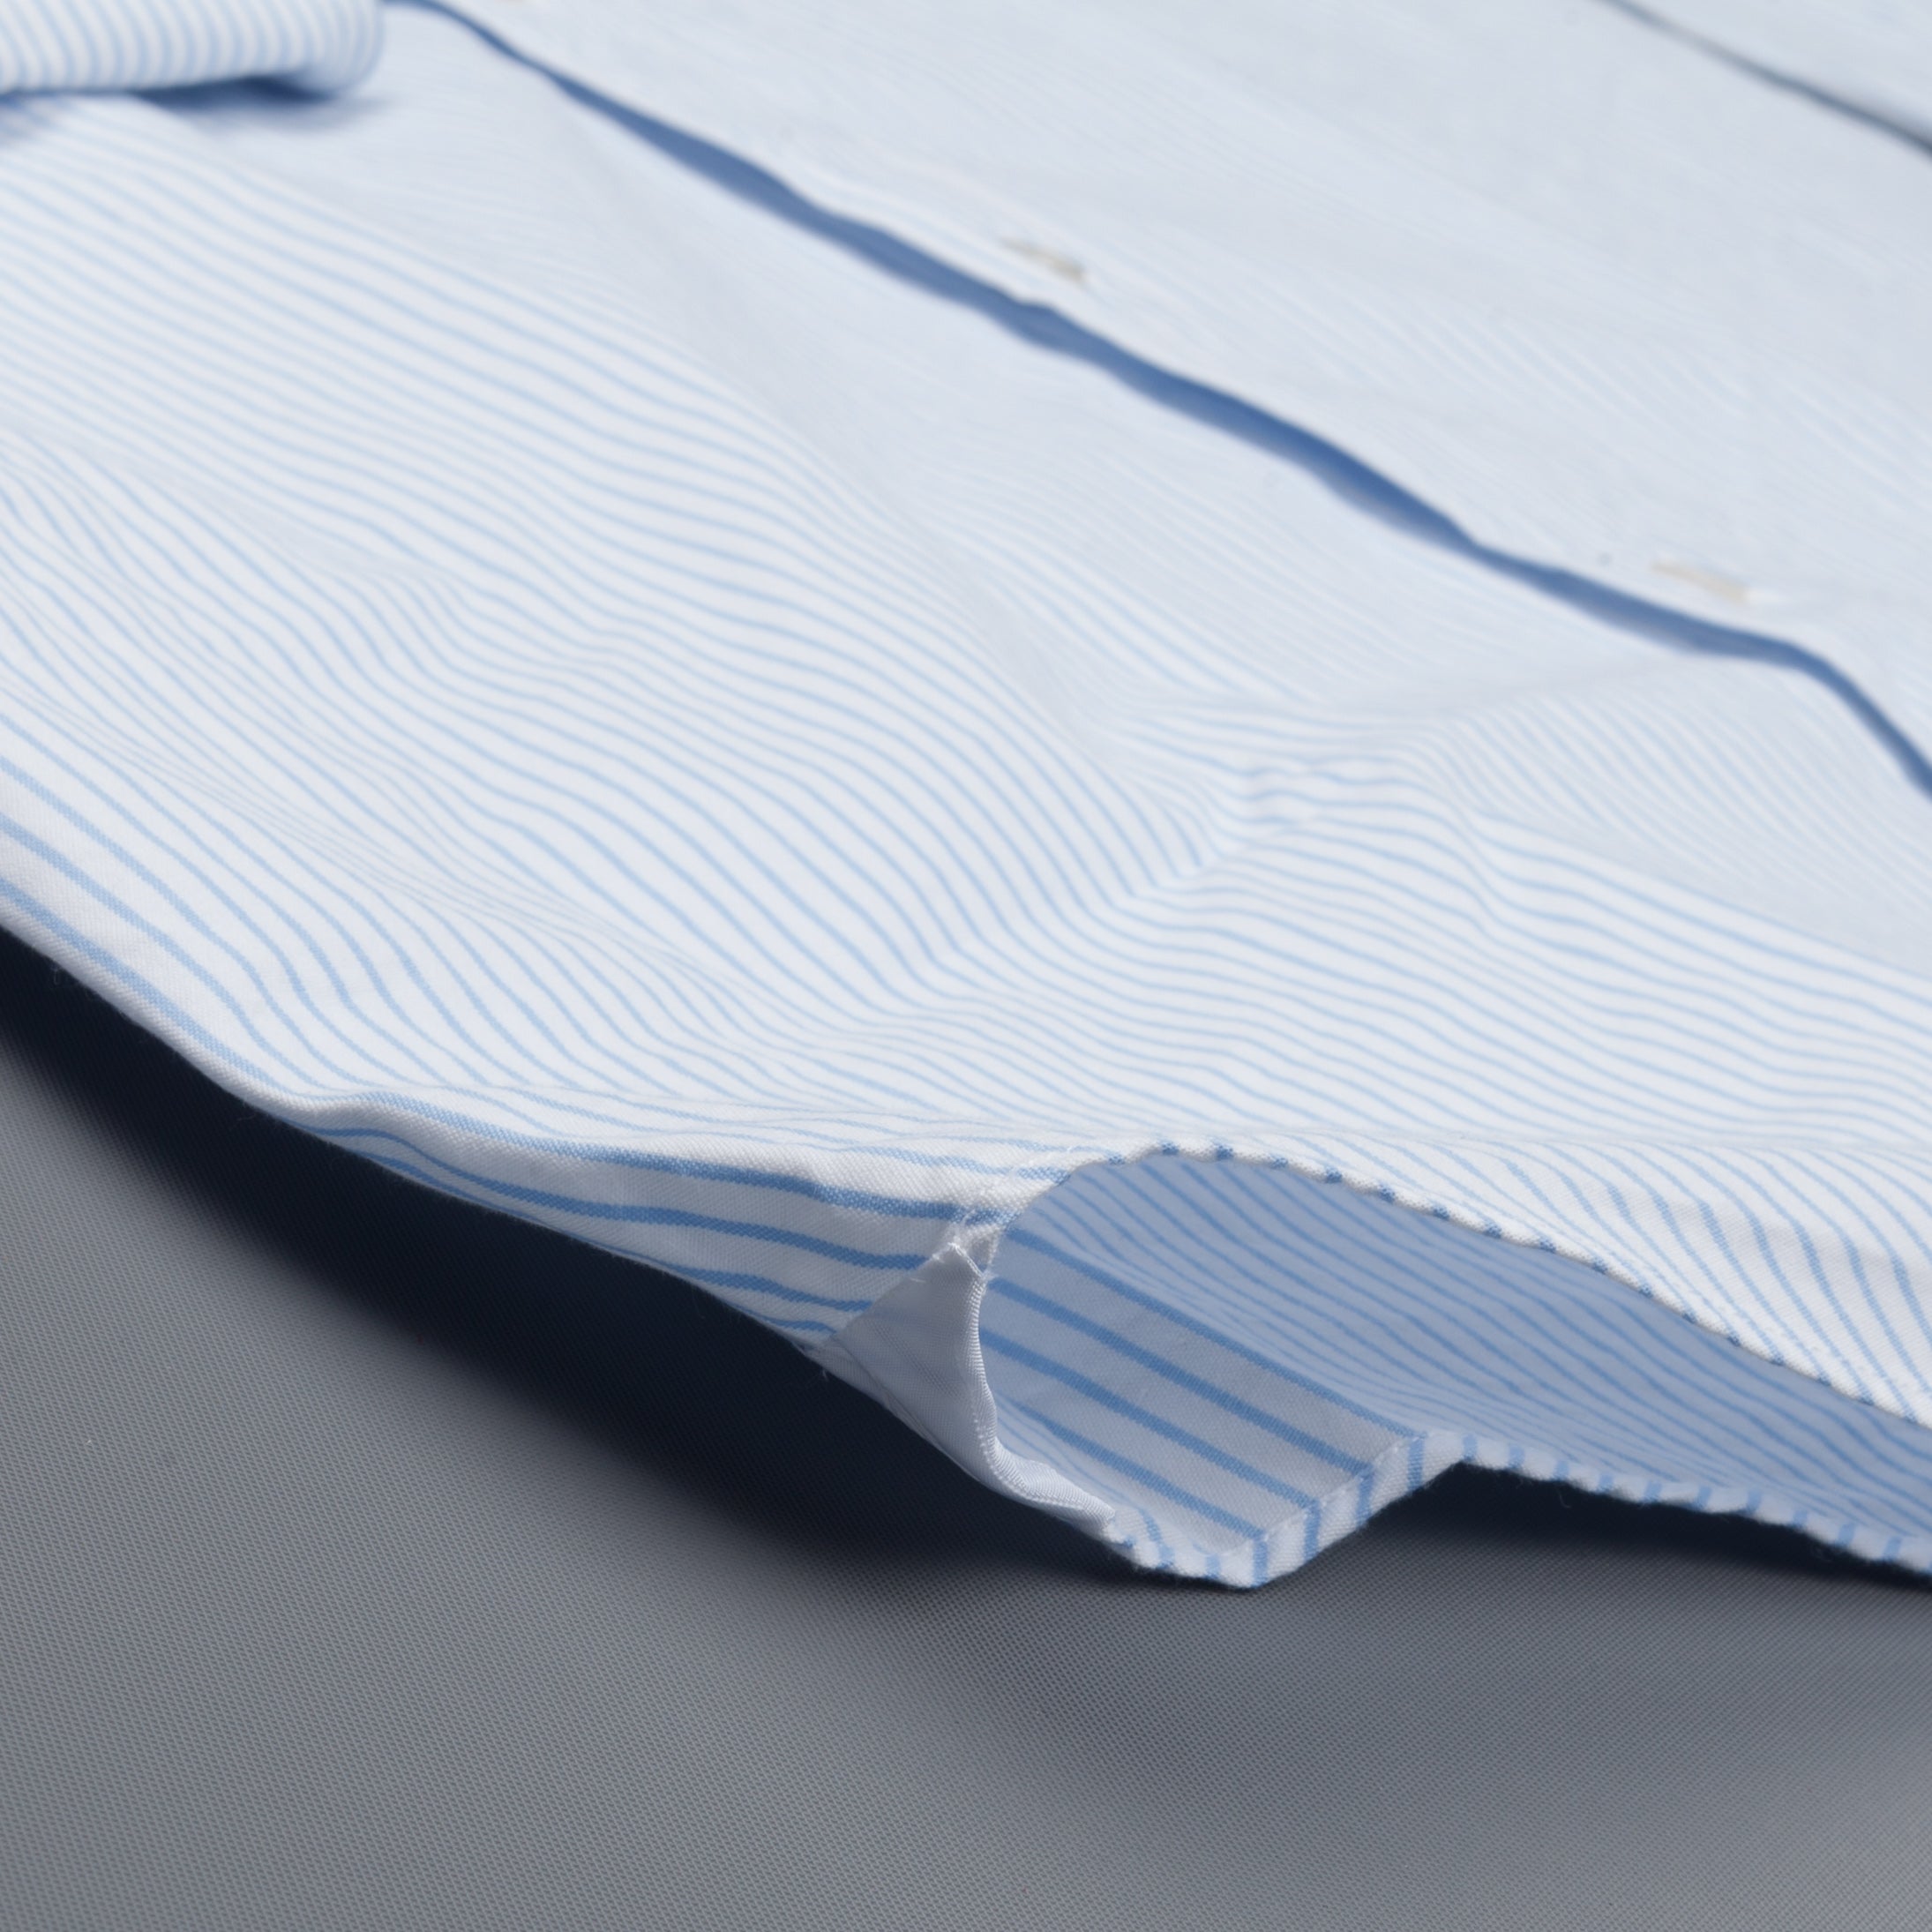 Finamore Tokyo Shirt Sergio Collar Blue Pencil Stripe